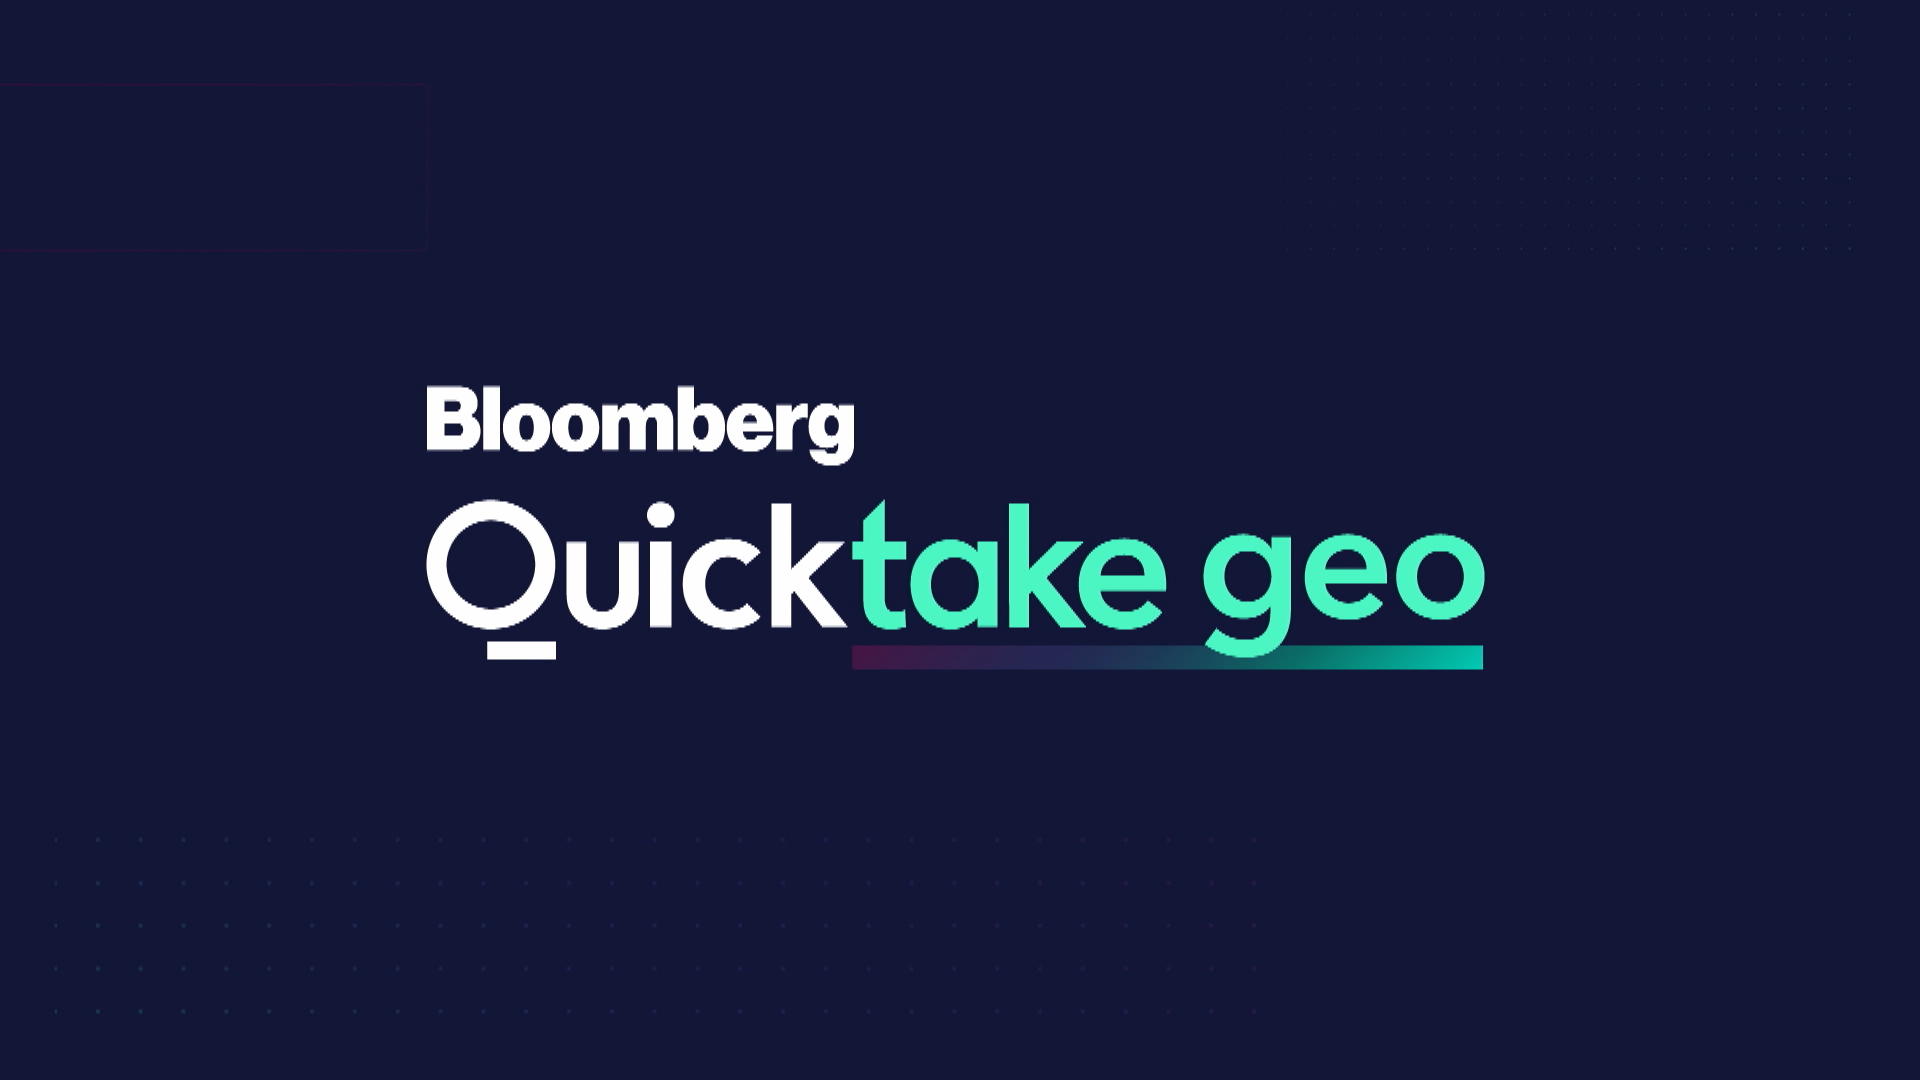 Bloomberg Quicktake “Geo” (03/18/2021)